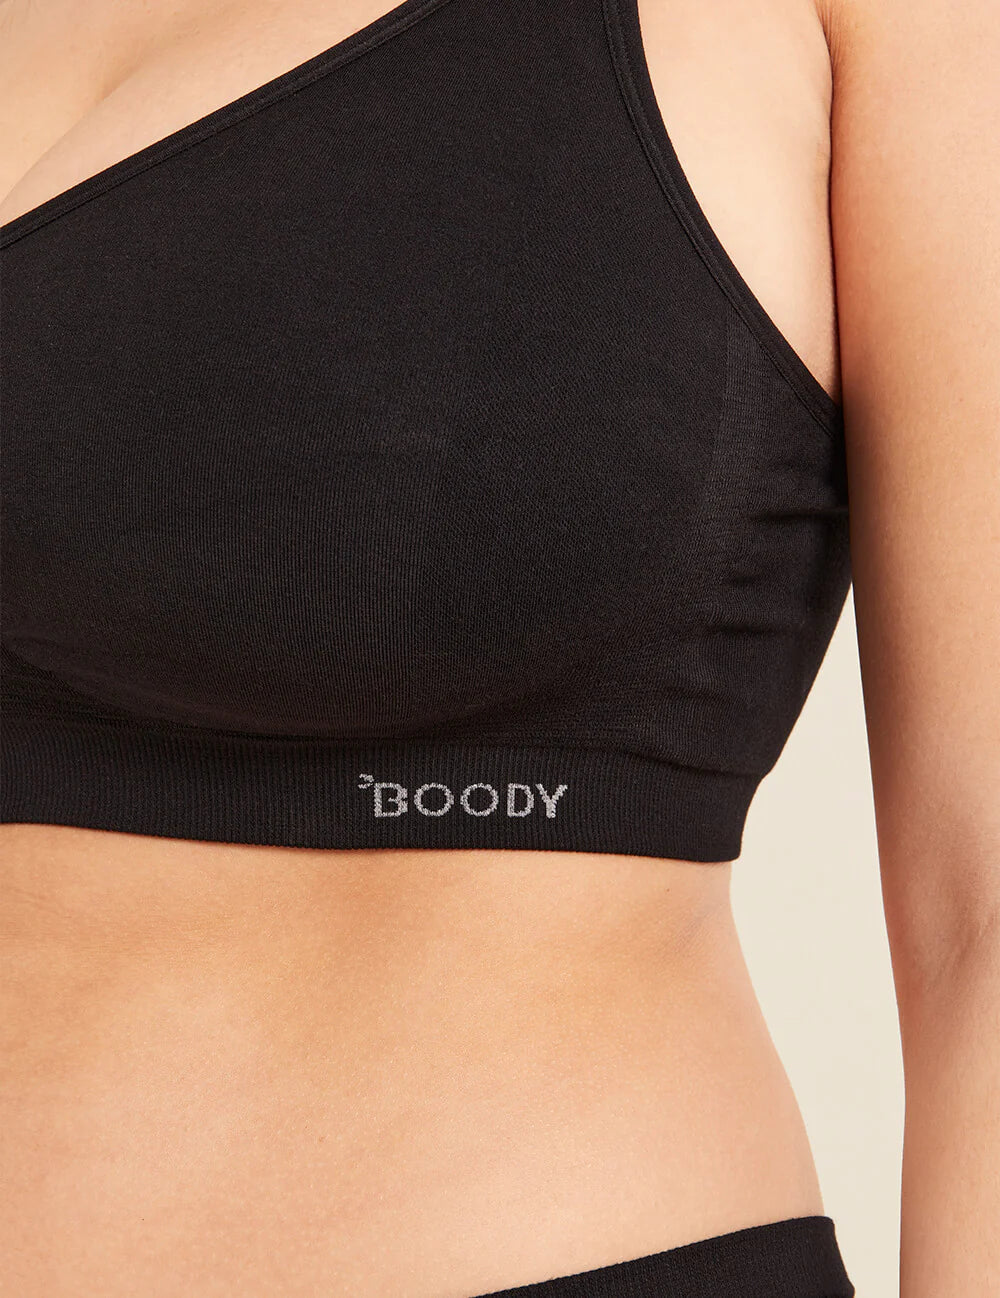 BOODY, Intimates & Sleepwear, Boody Full Bust Wireless Bra